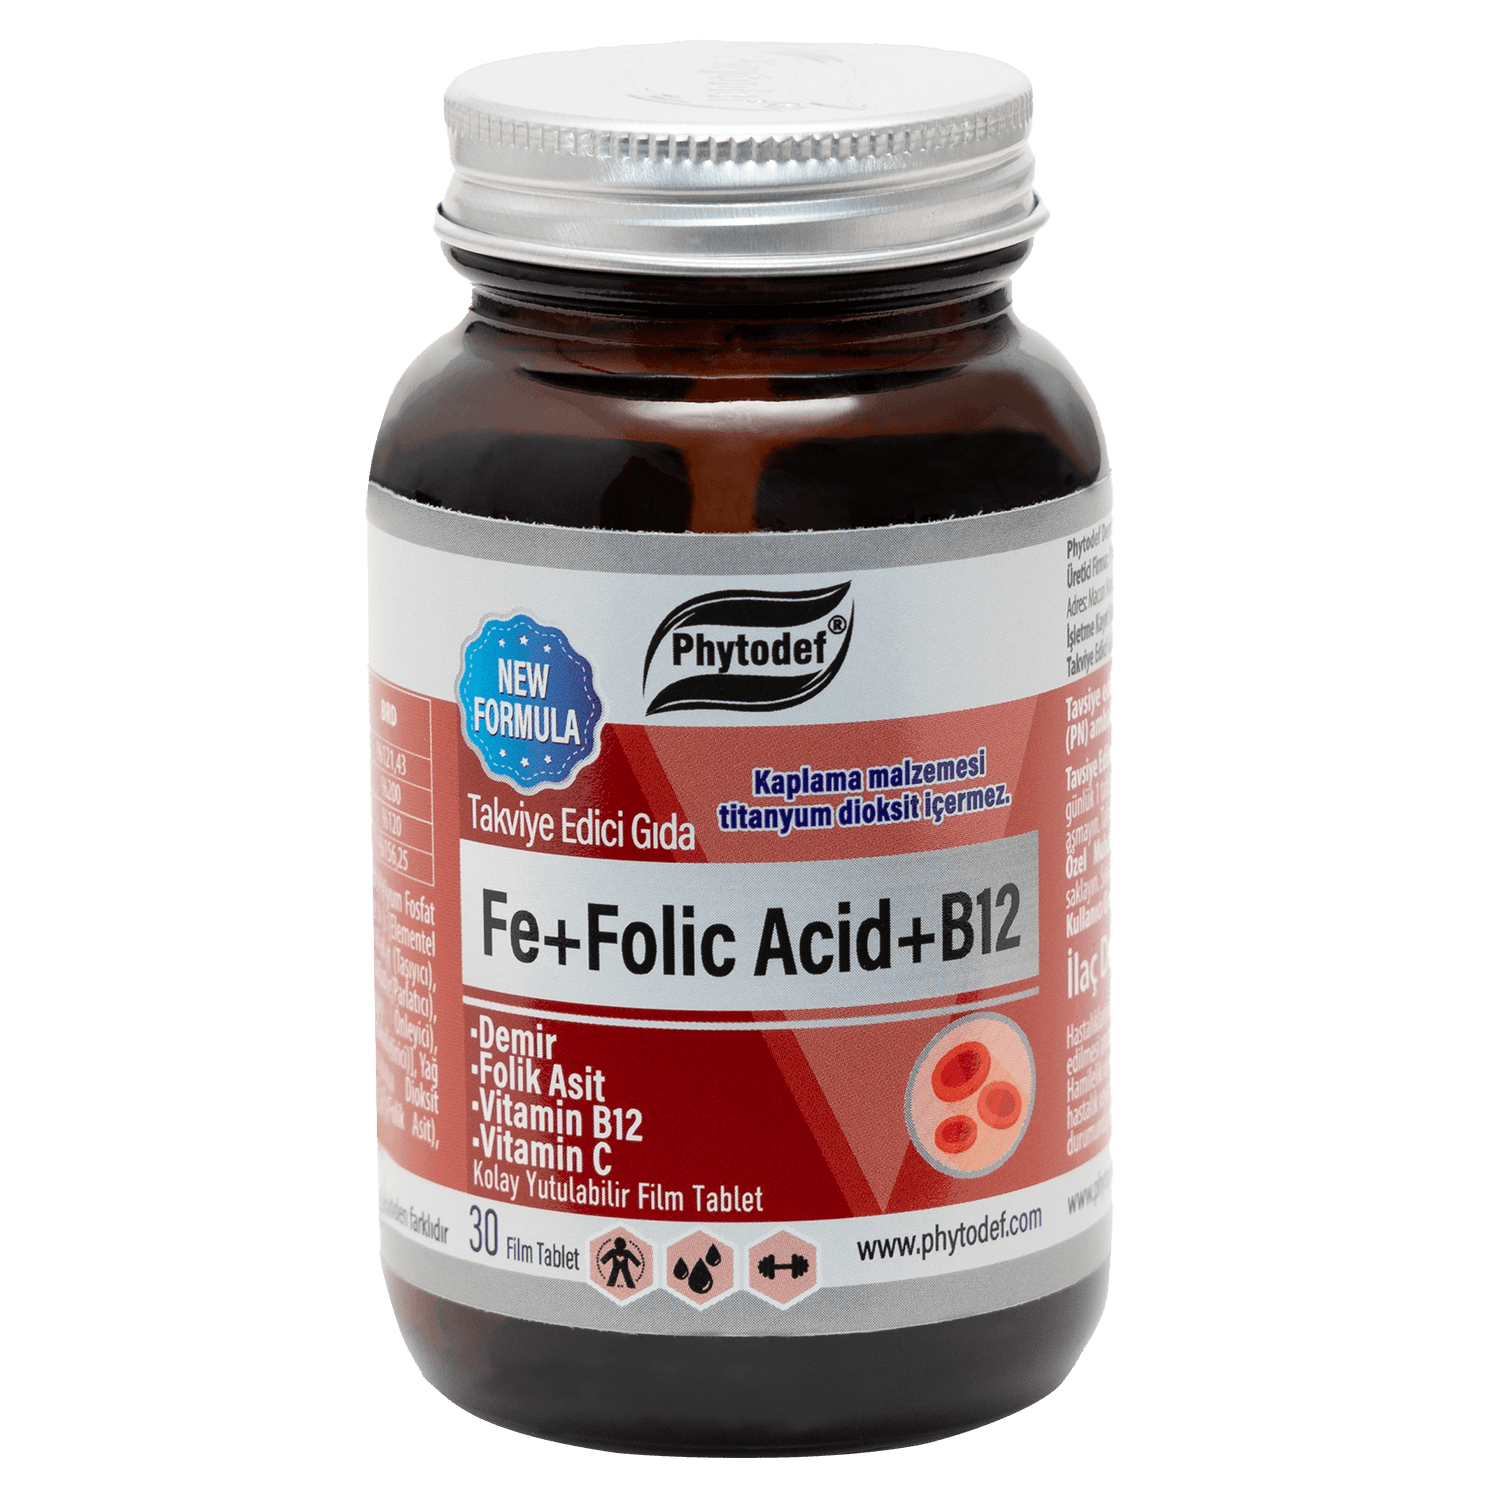 Demir + Folik Asit + Vitamin B12 + Vitamin C - 30 Tablet